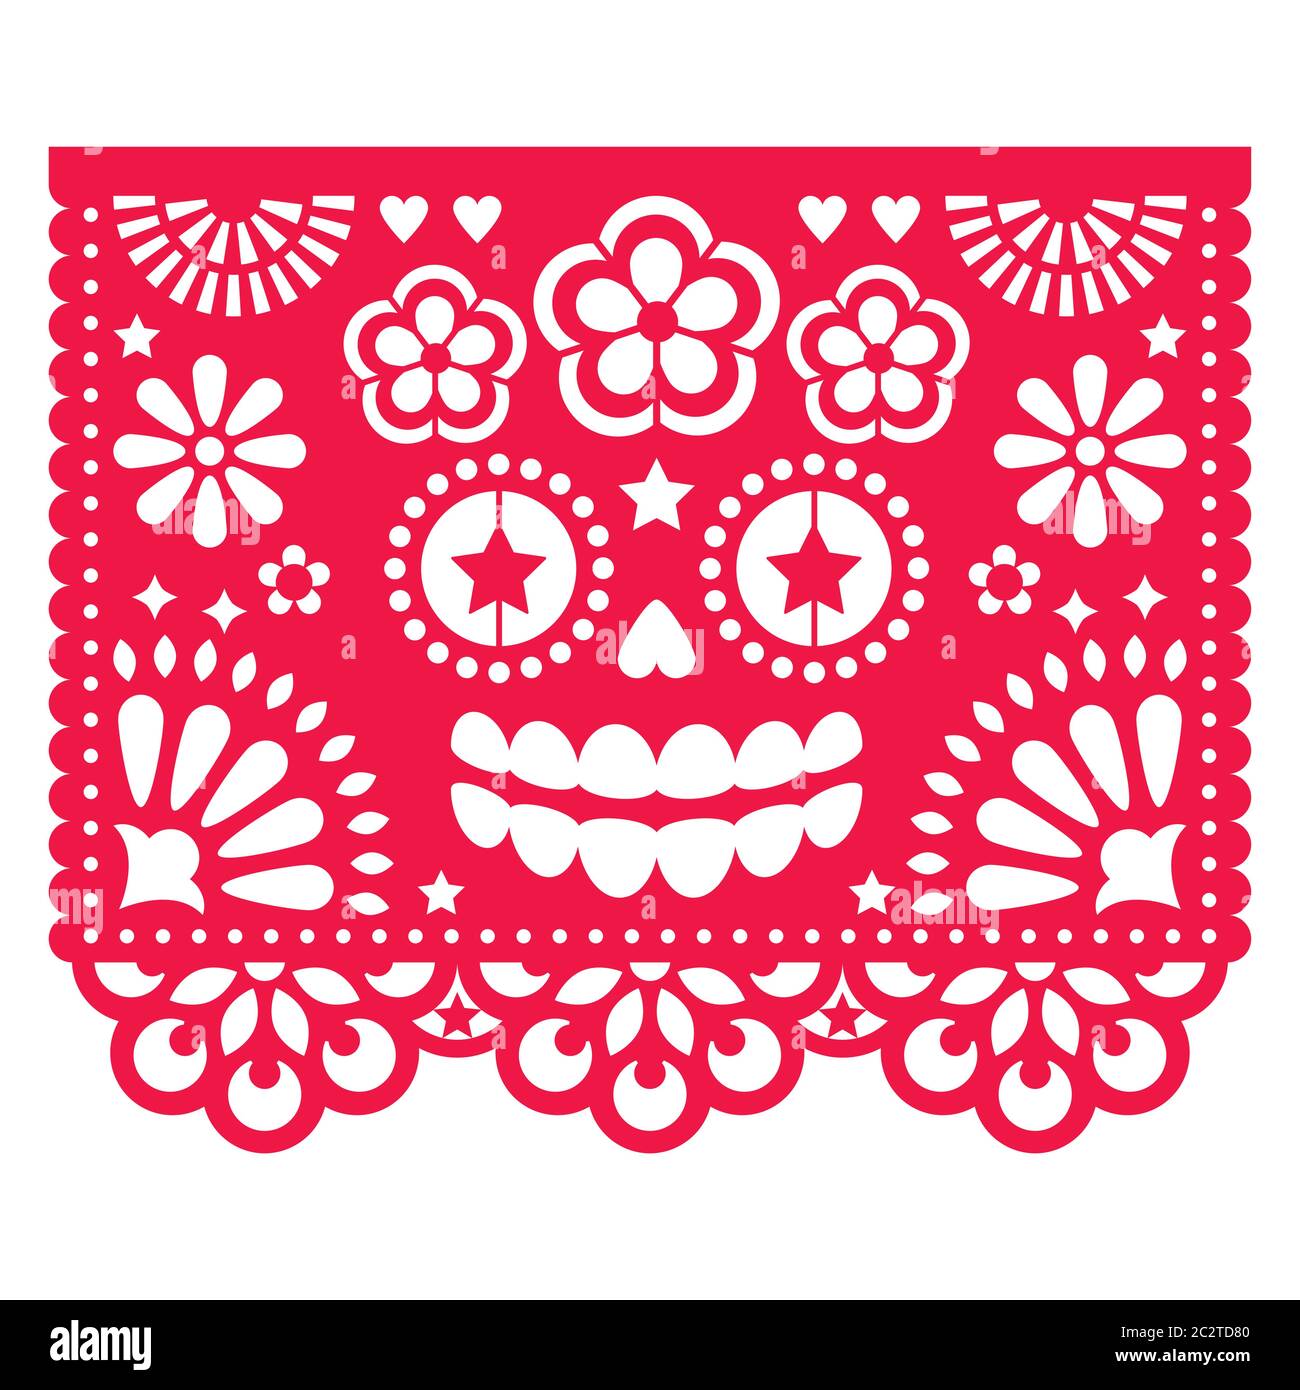 Halloween Papel Picado design with La Catrina skull, Mexican paper cut out pattern - Dia de Los Muertos, Day of the Dead celebration Stock Vector